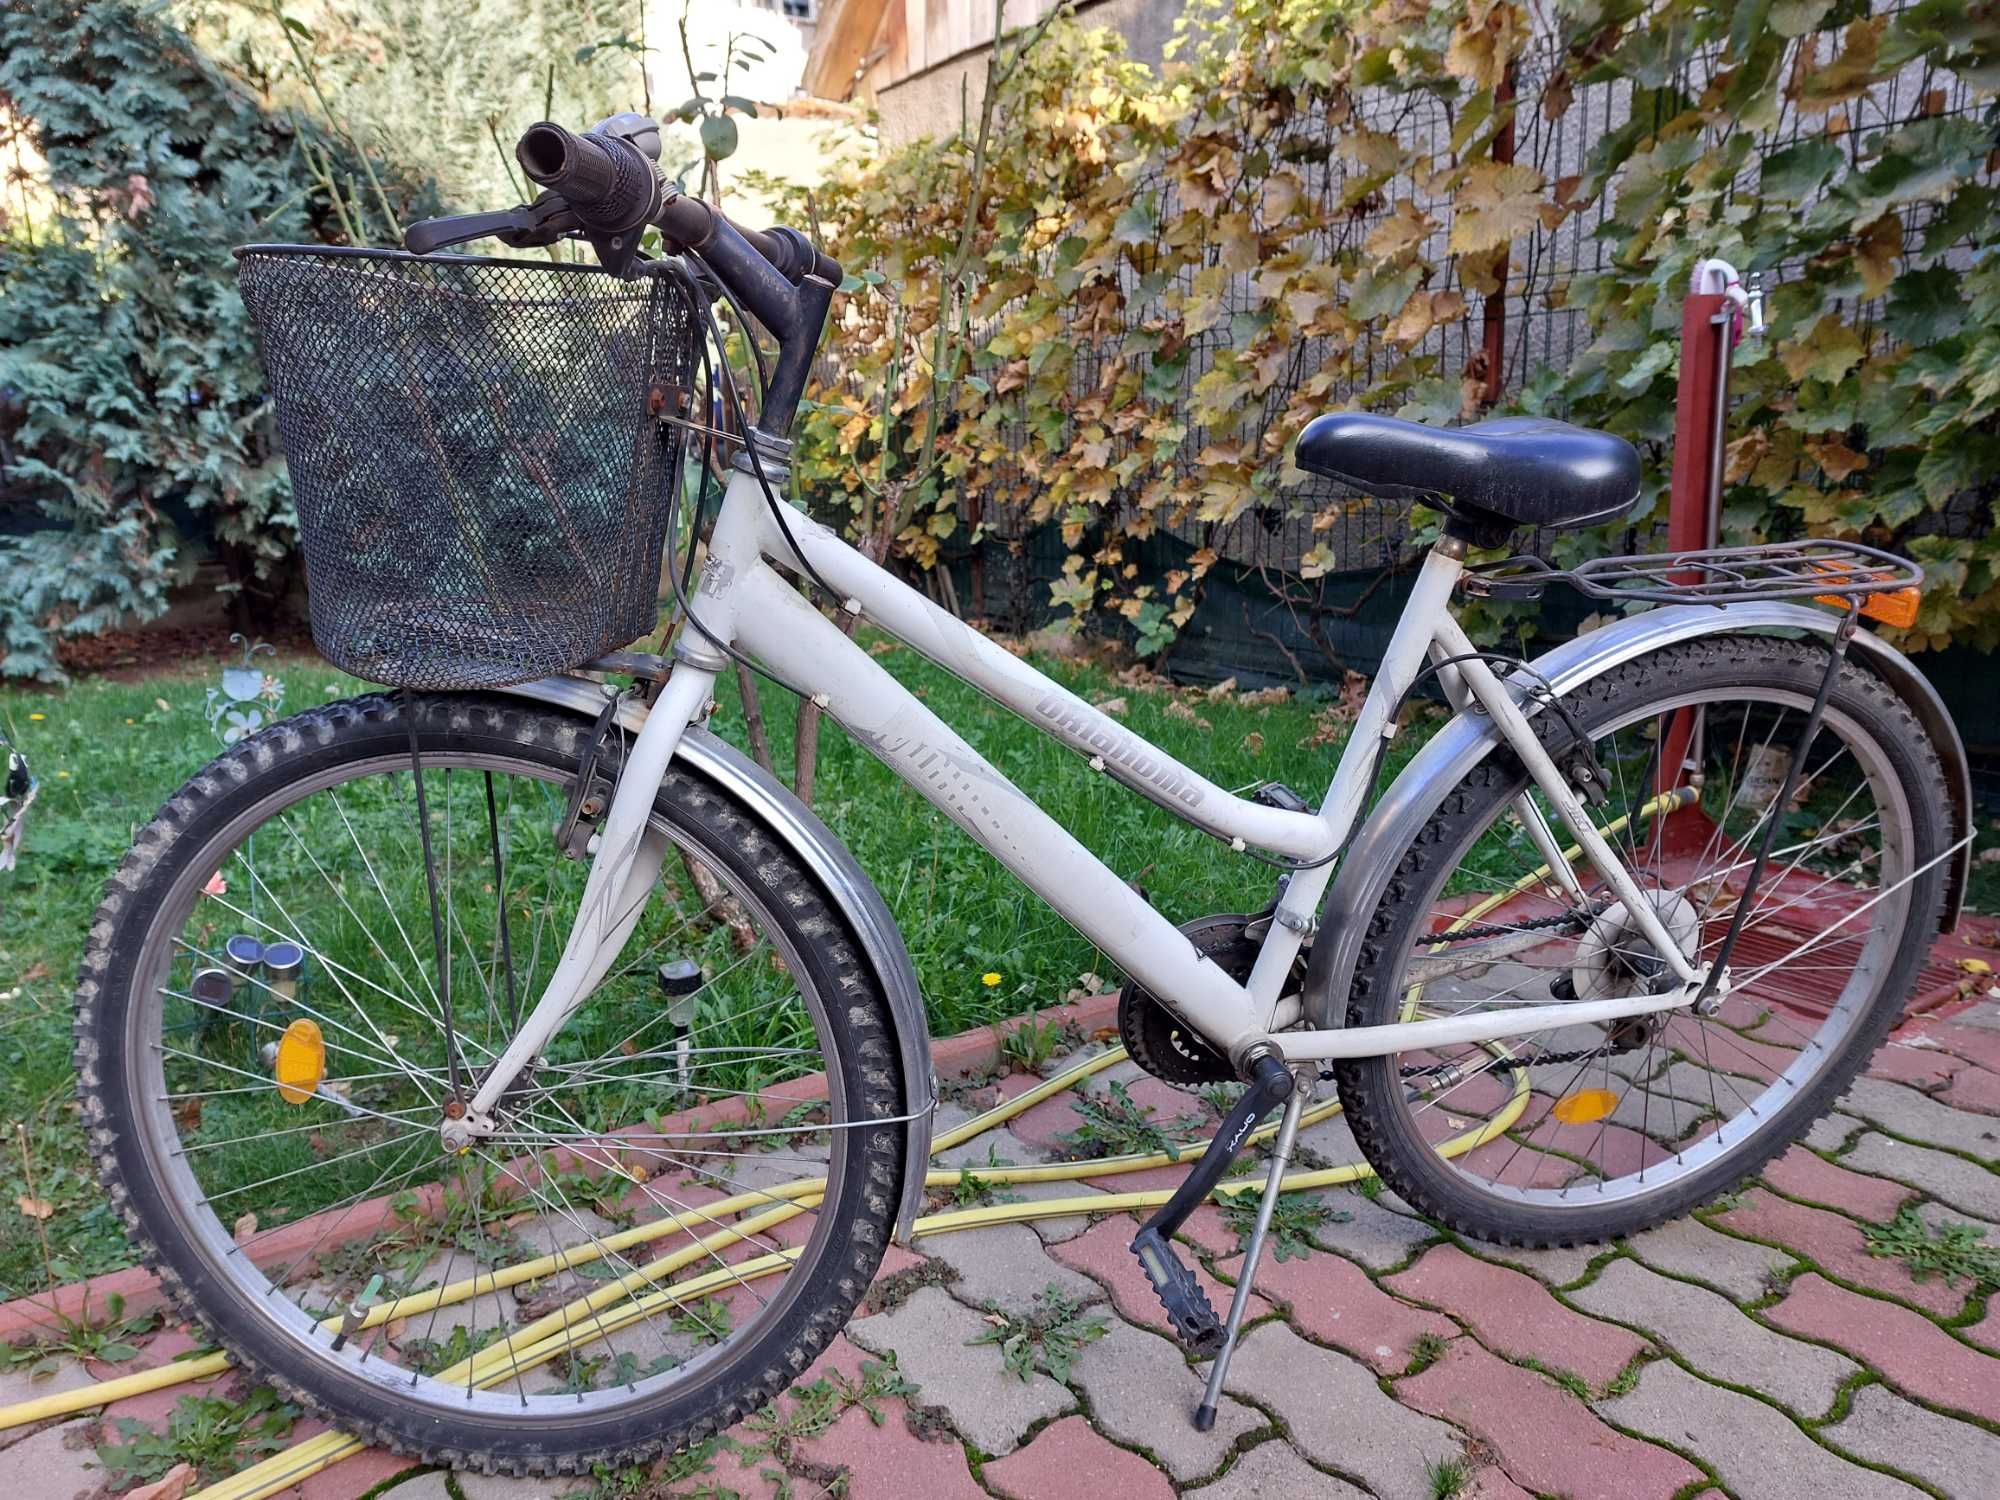 Bicicleta roti de 26